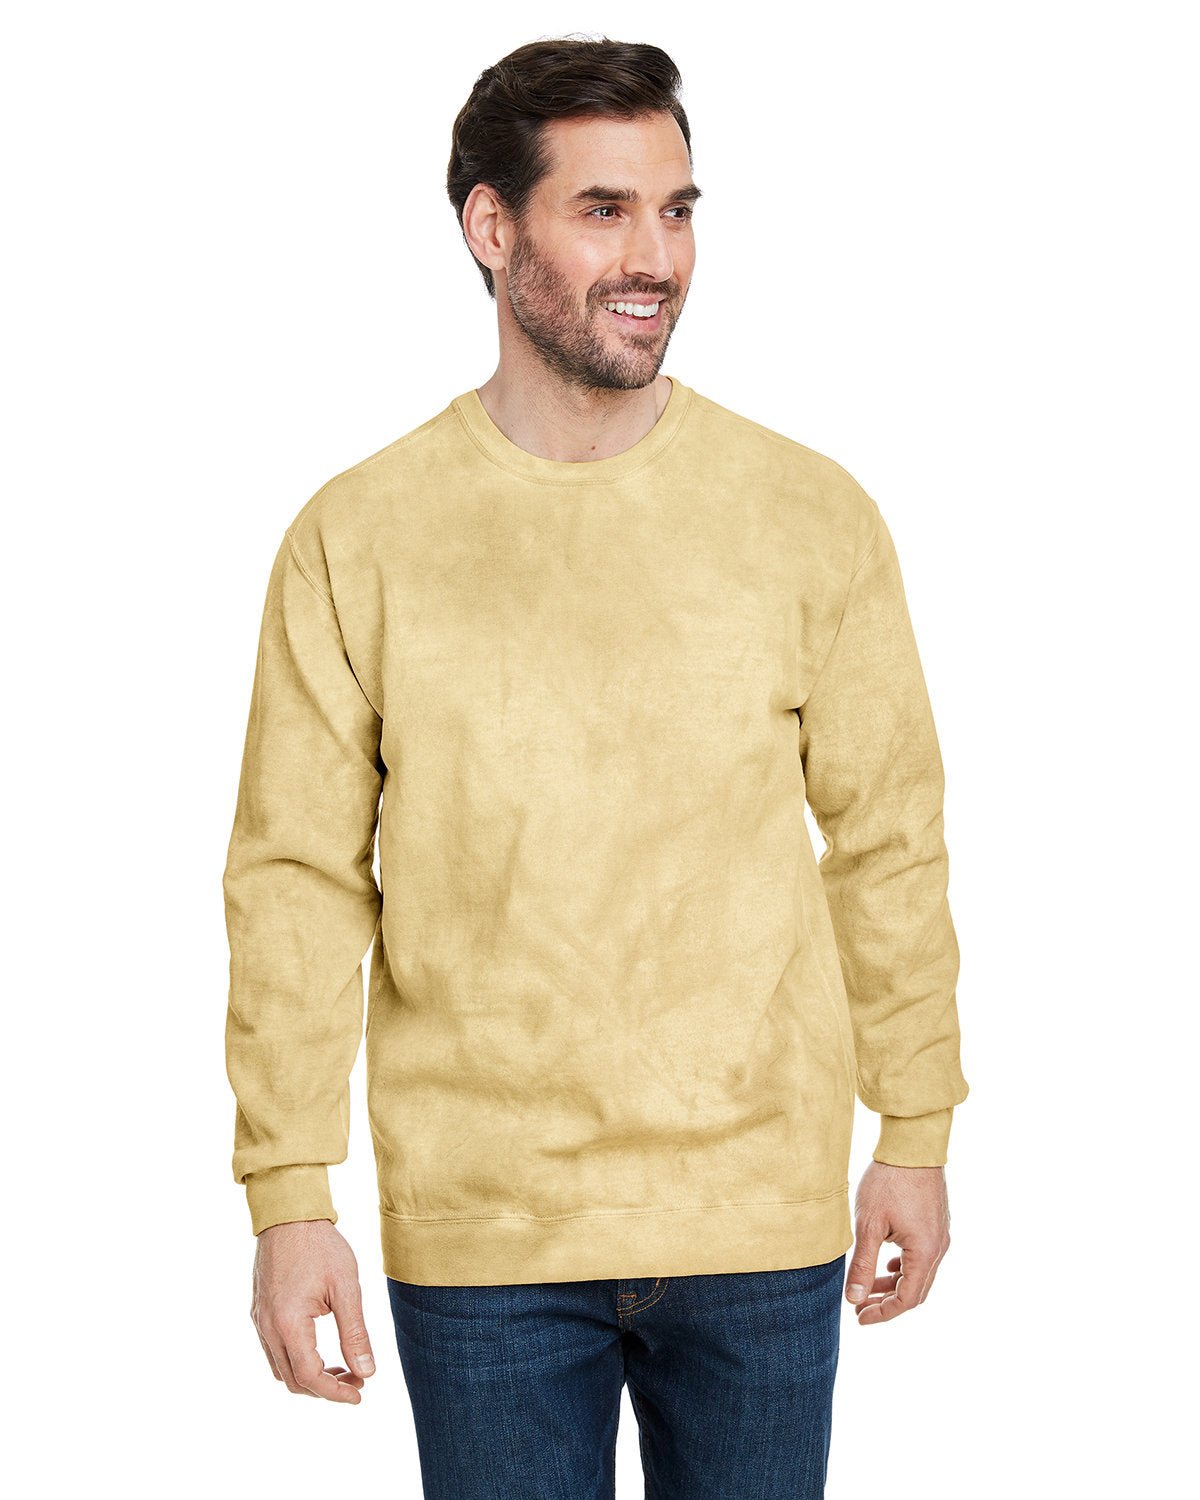 1545CC-Comfort Colors-CITRINE-Comfort Colors-Sweatshirts-1